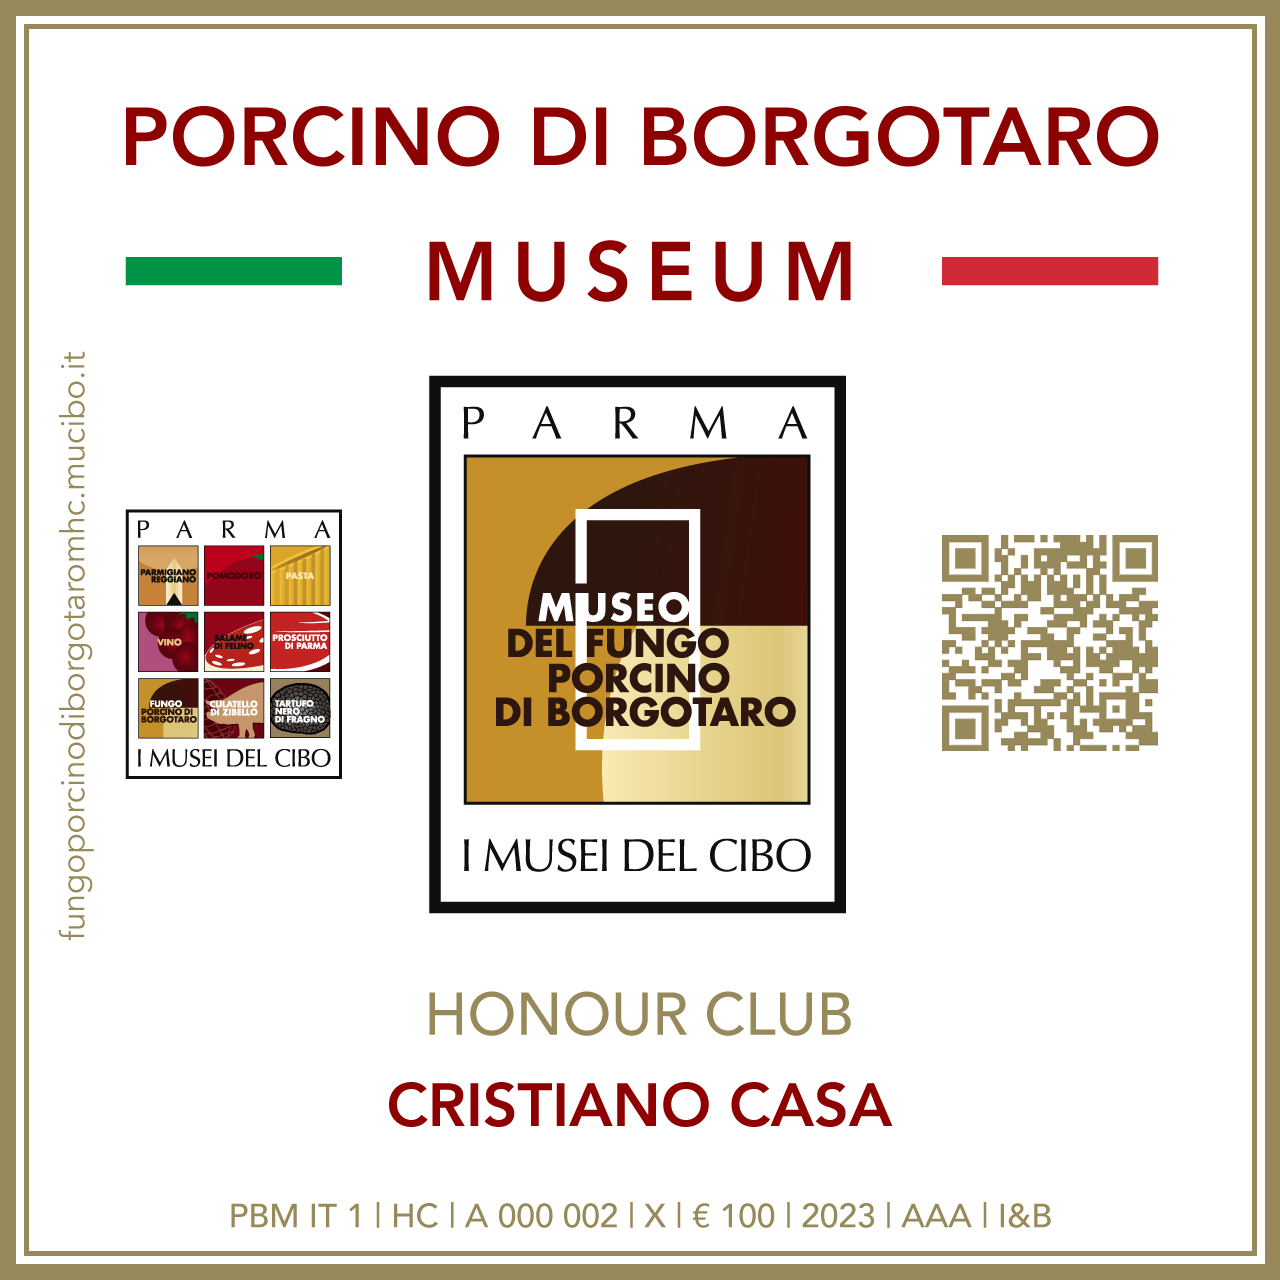 Fungo Porcino di Borgotaro Museum Honour Club - Token Id A 000 002 - CRISTIANO CASA